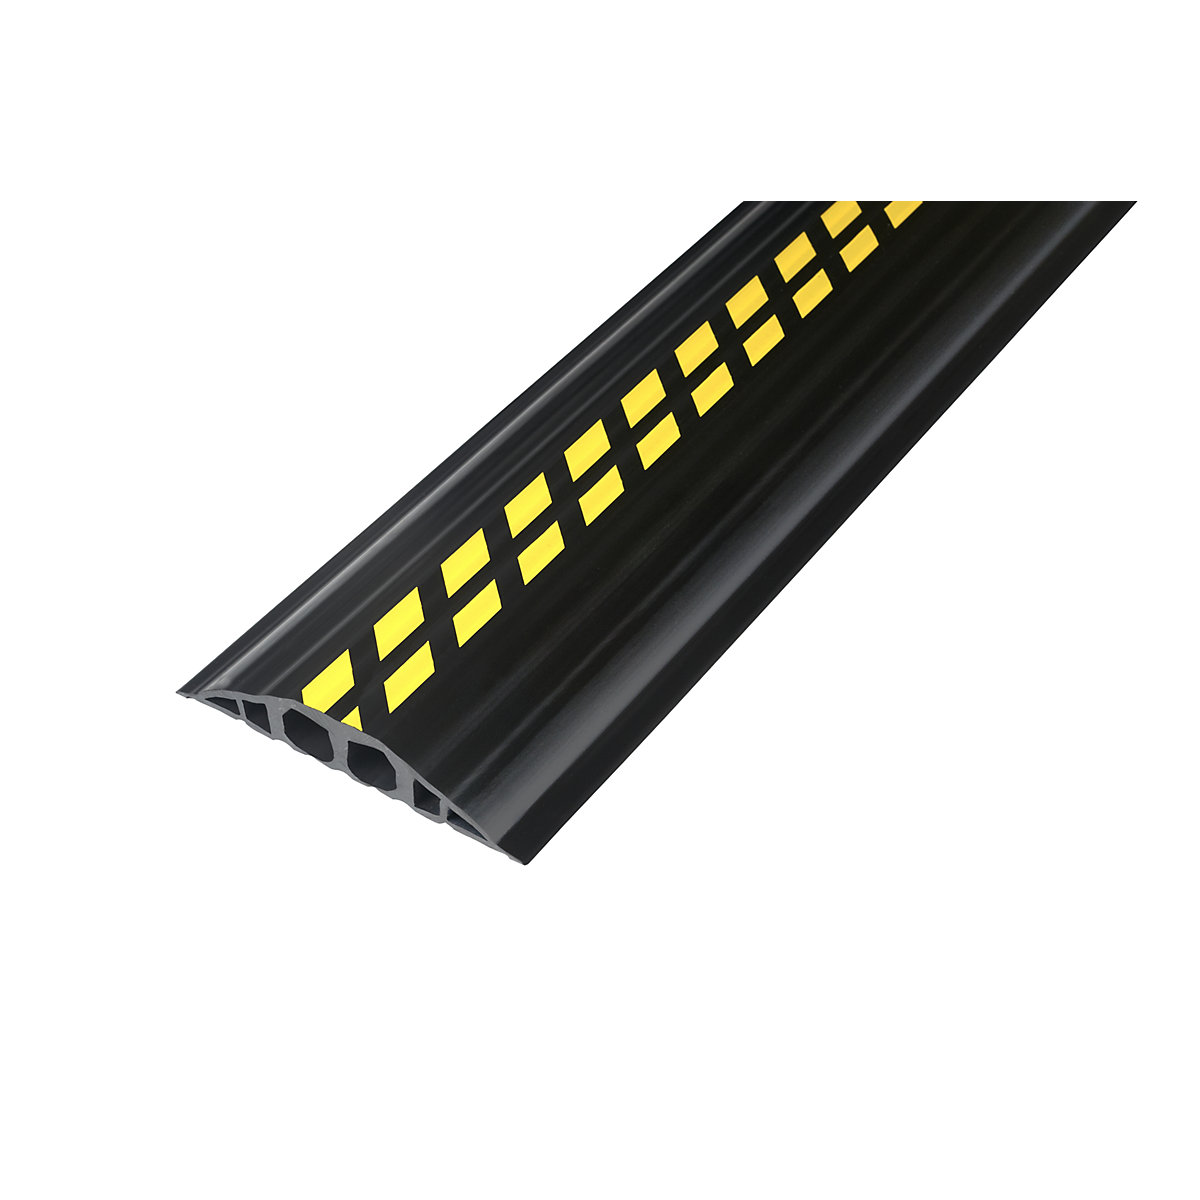 Kabelbrücke aus PVC, LxBxH 1500 x 200 x 35 mm, schwarz / gelb